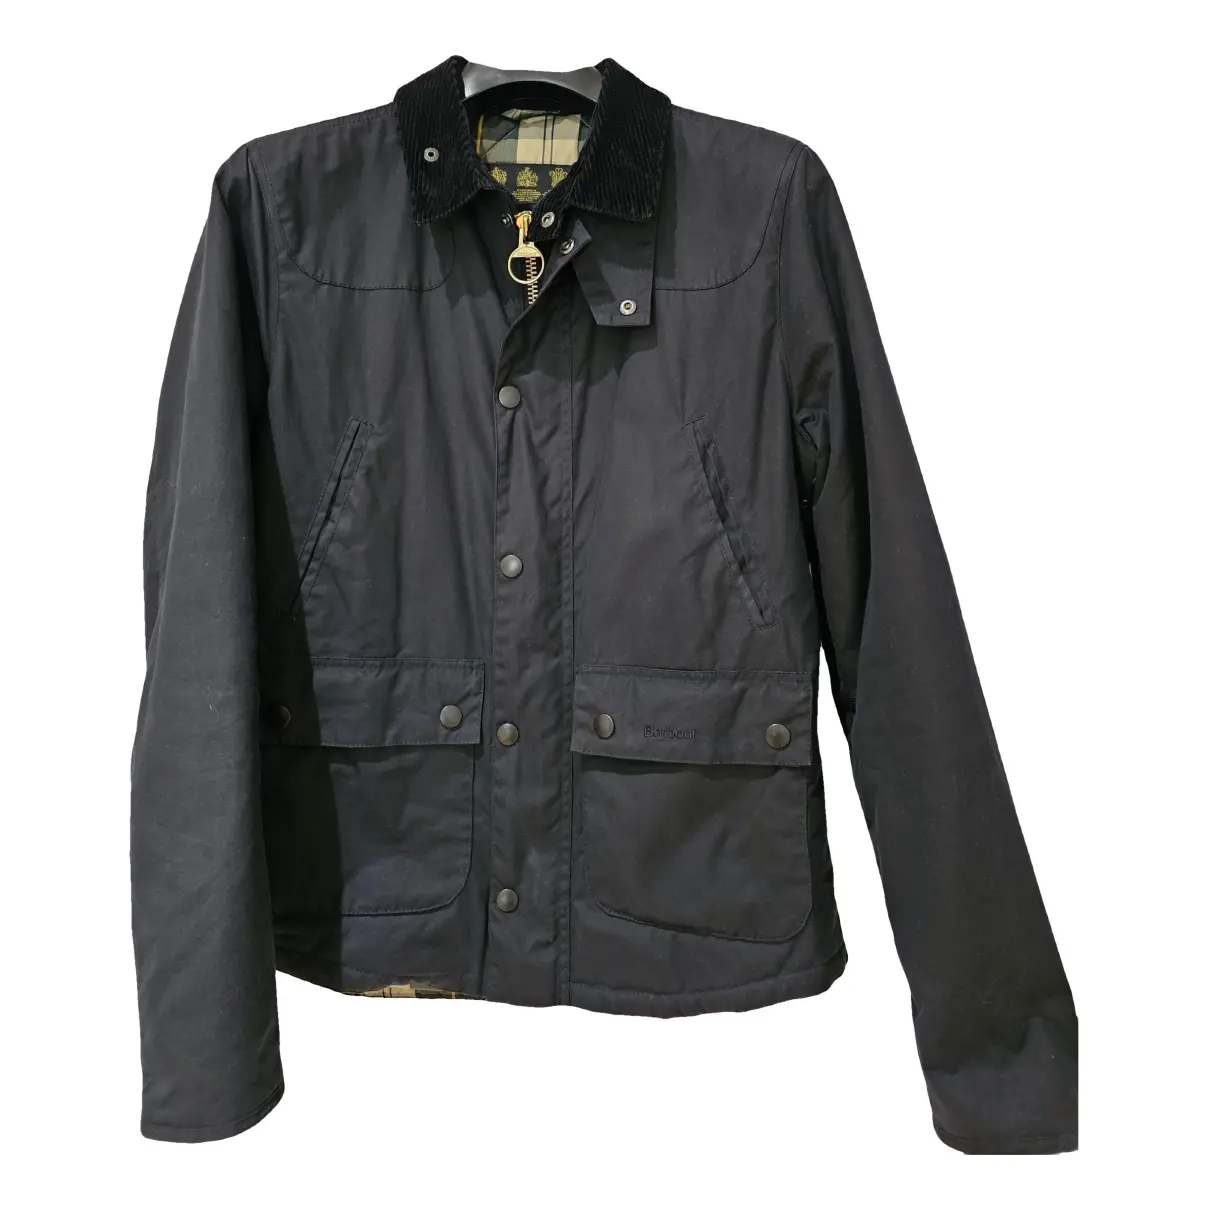 Leather vest Aquascutum Black size M International in Leather 